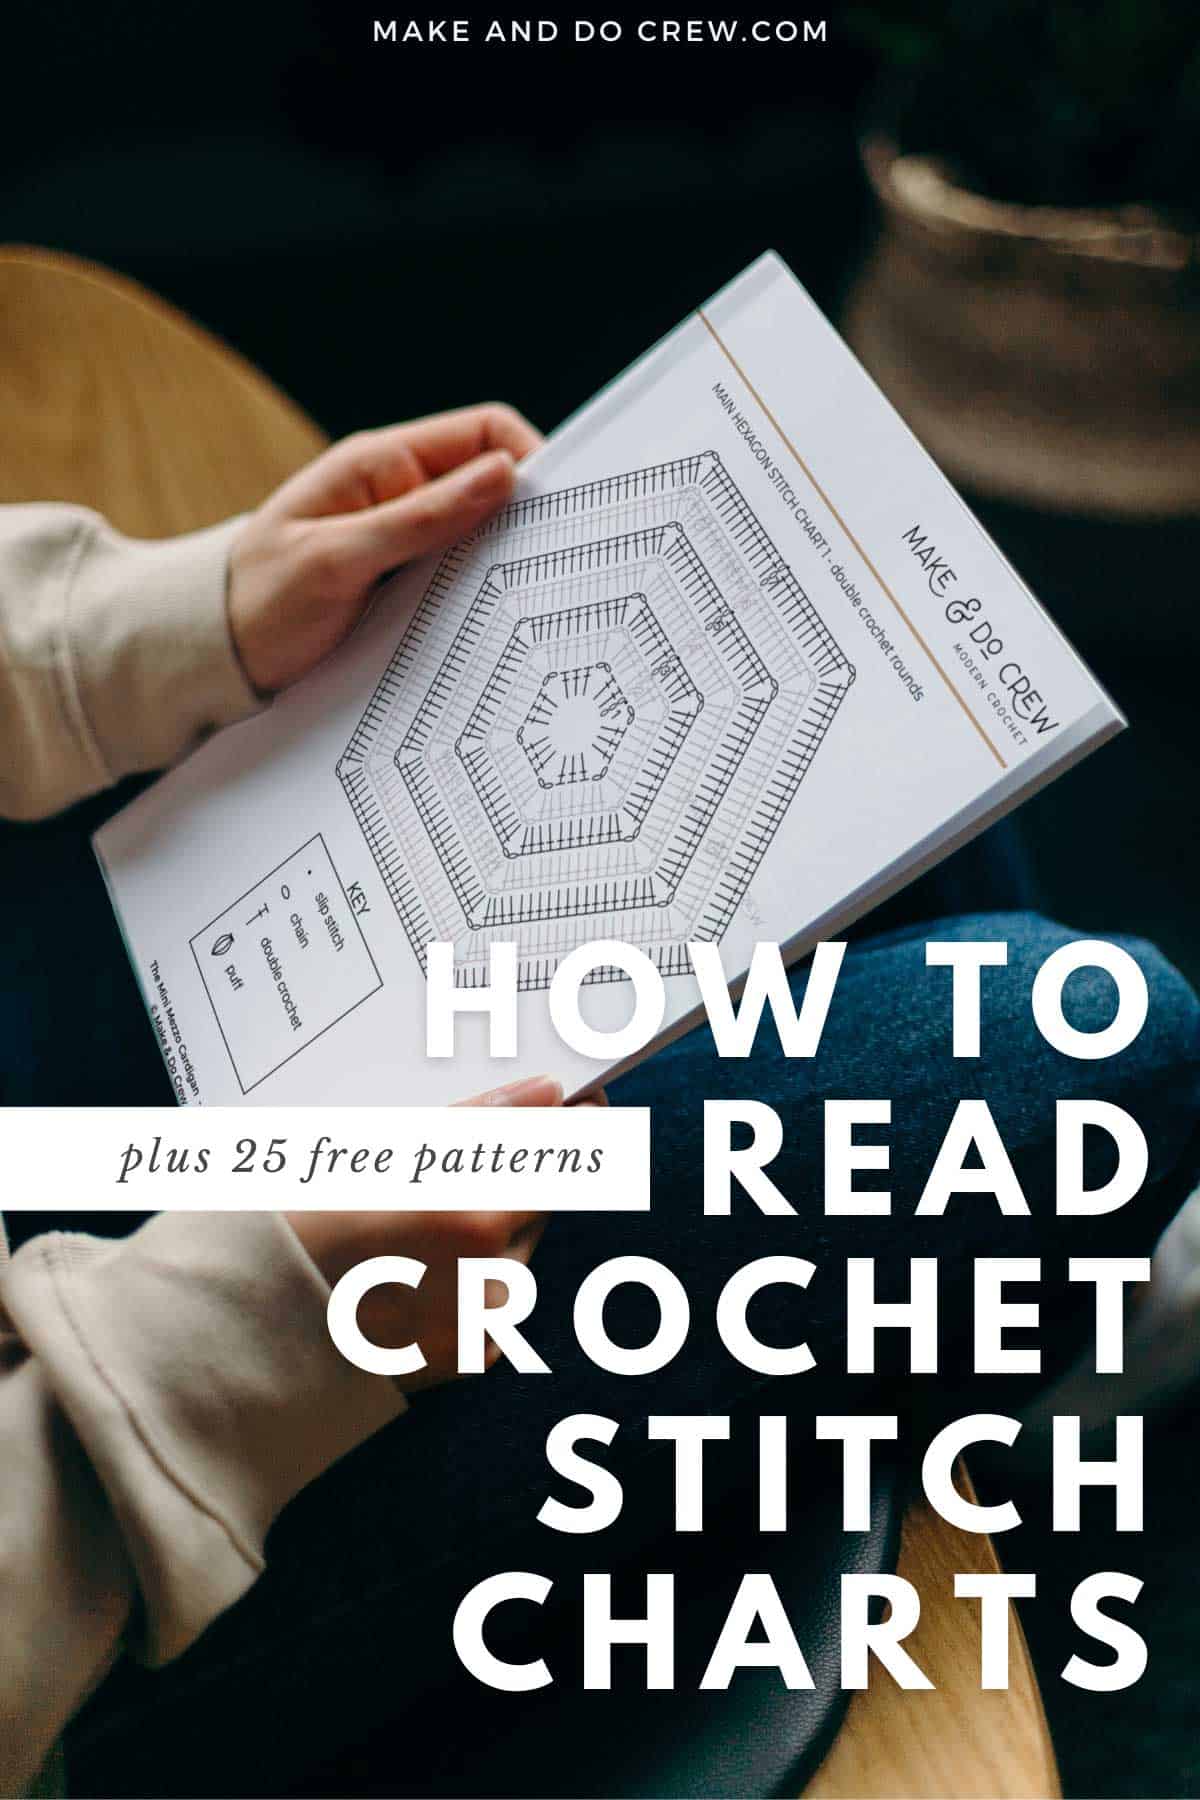 A person holding a crochet stitch chart.